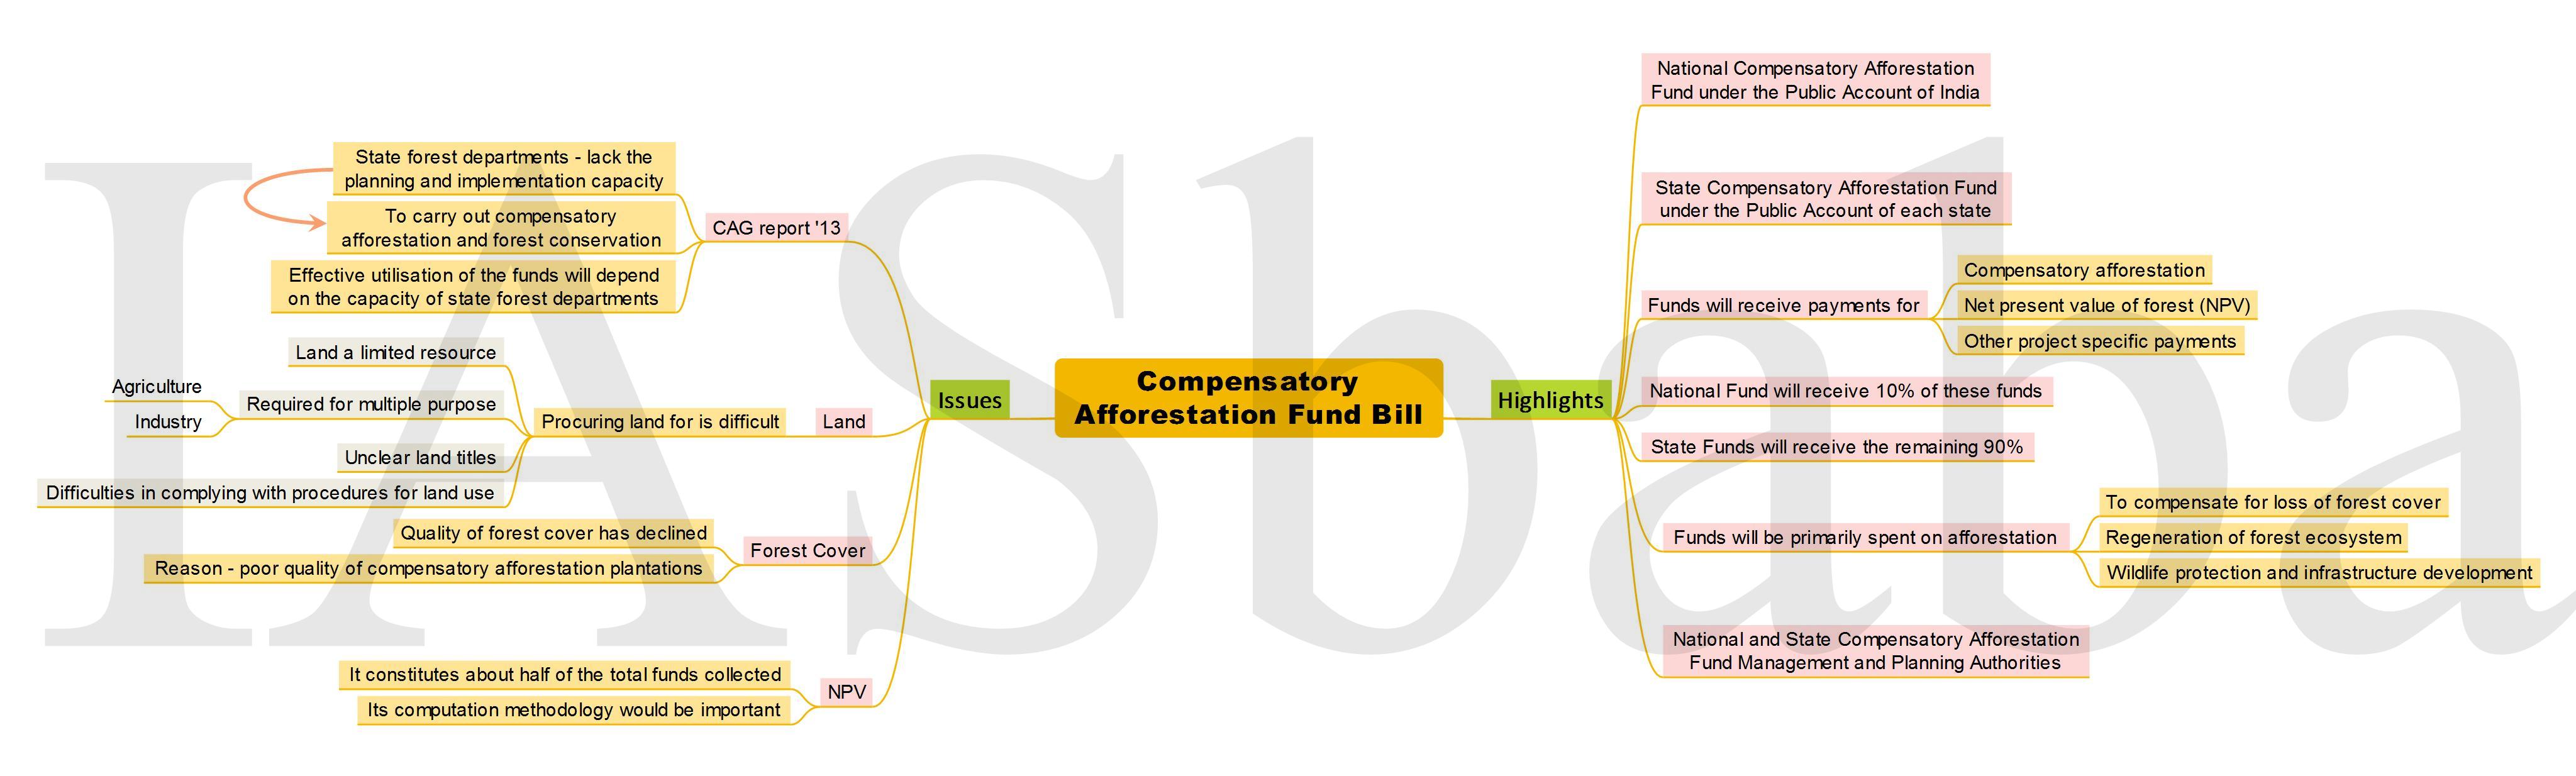 Compensatory Afforestation Fund Bill-IASbaba